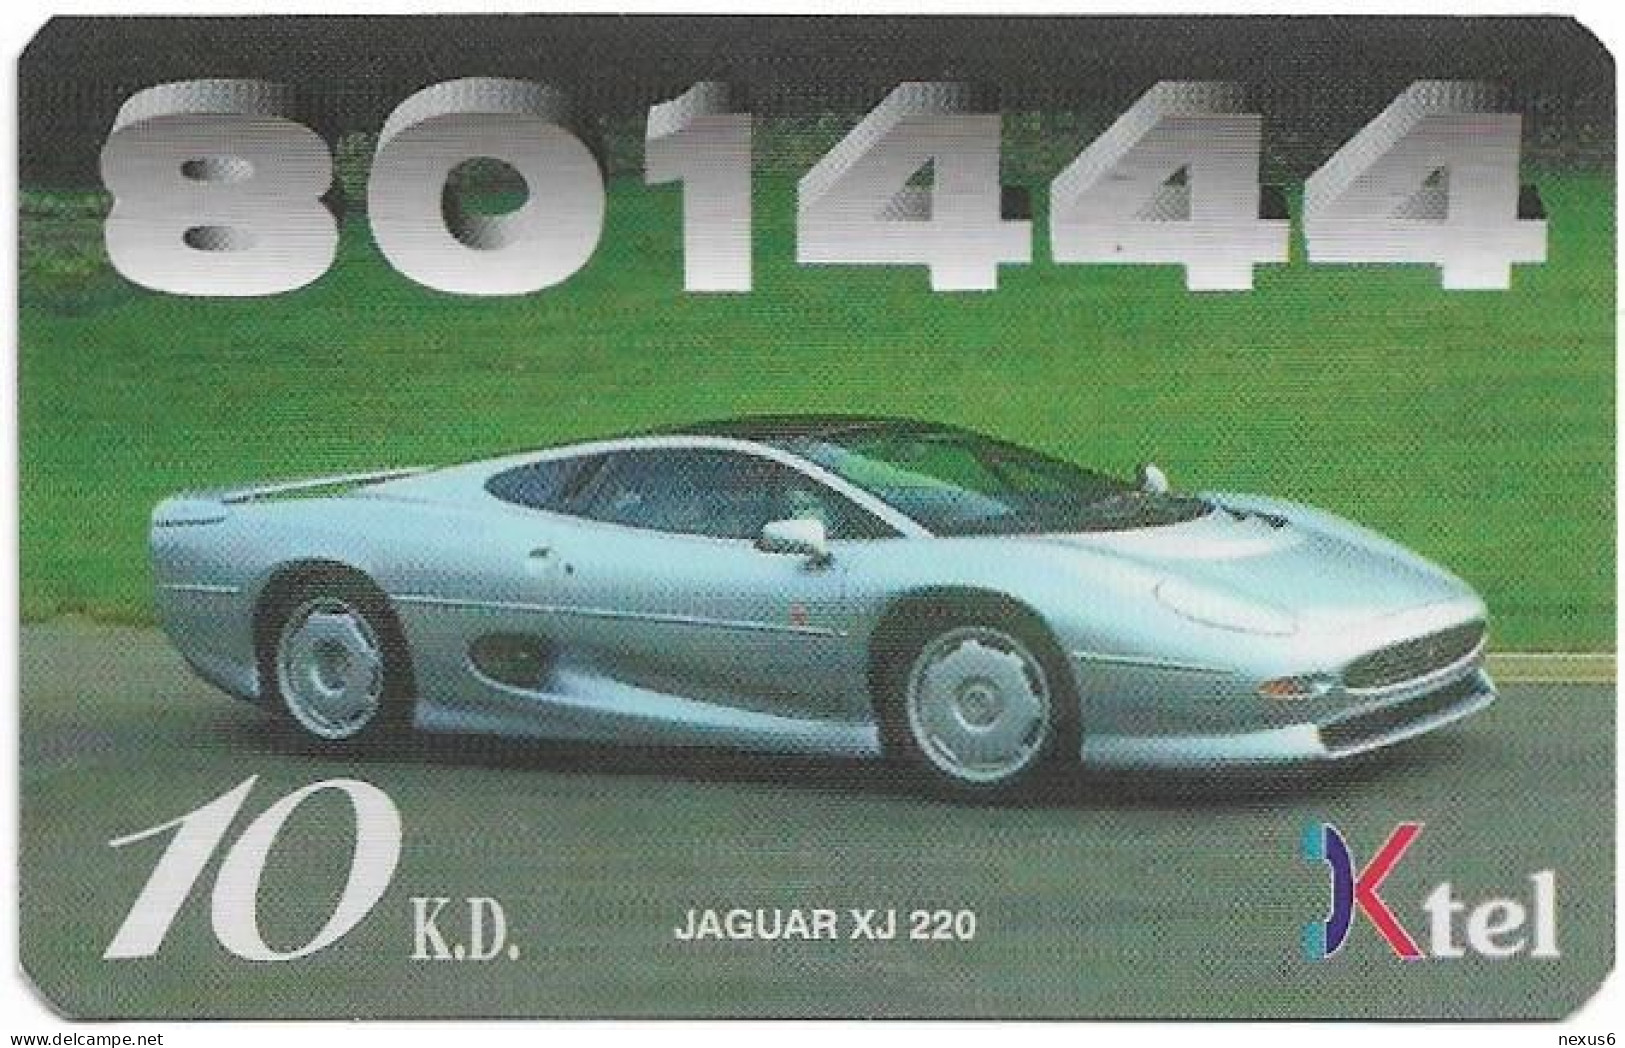 Kuwait - Ministry Of Comm. - KTEL Card - Car Jaguar XJ 220, Remote Mem. 10KD, Used - Kuwait